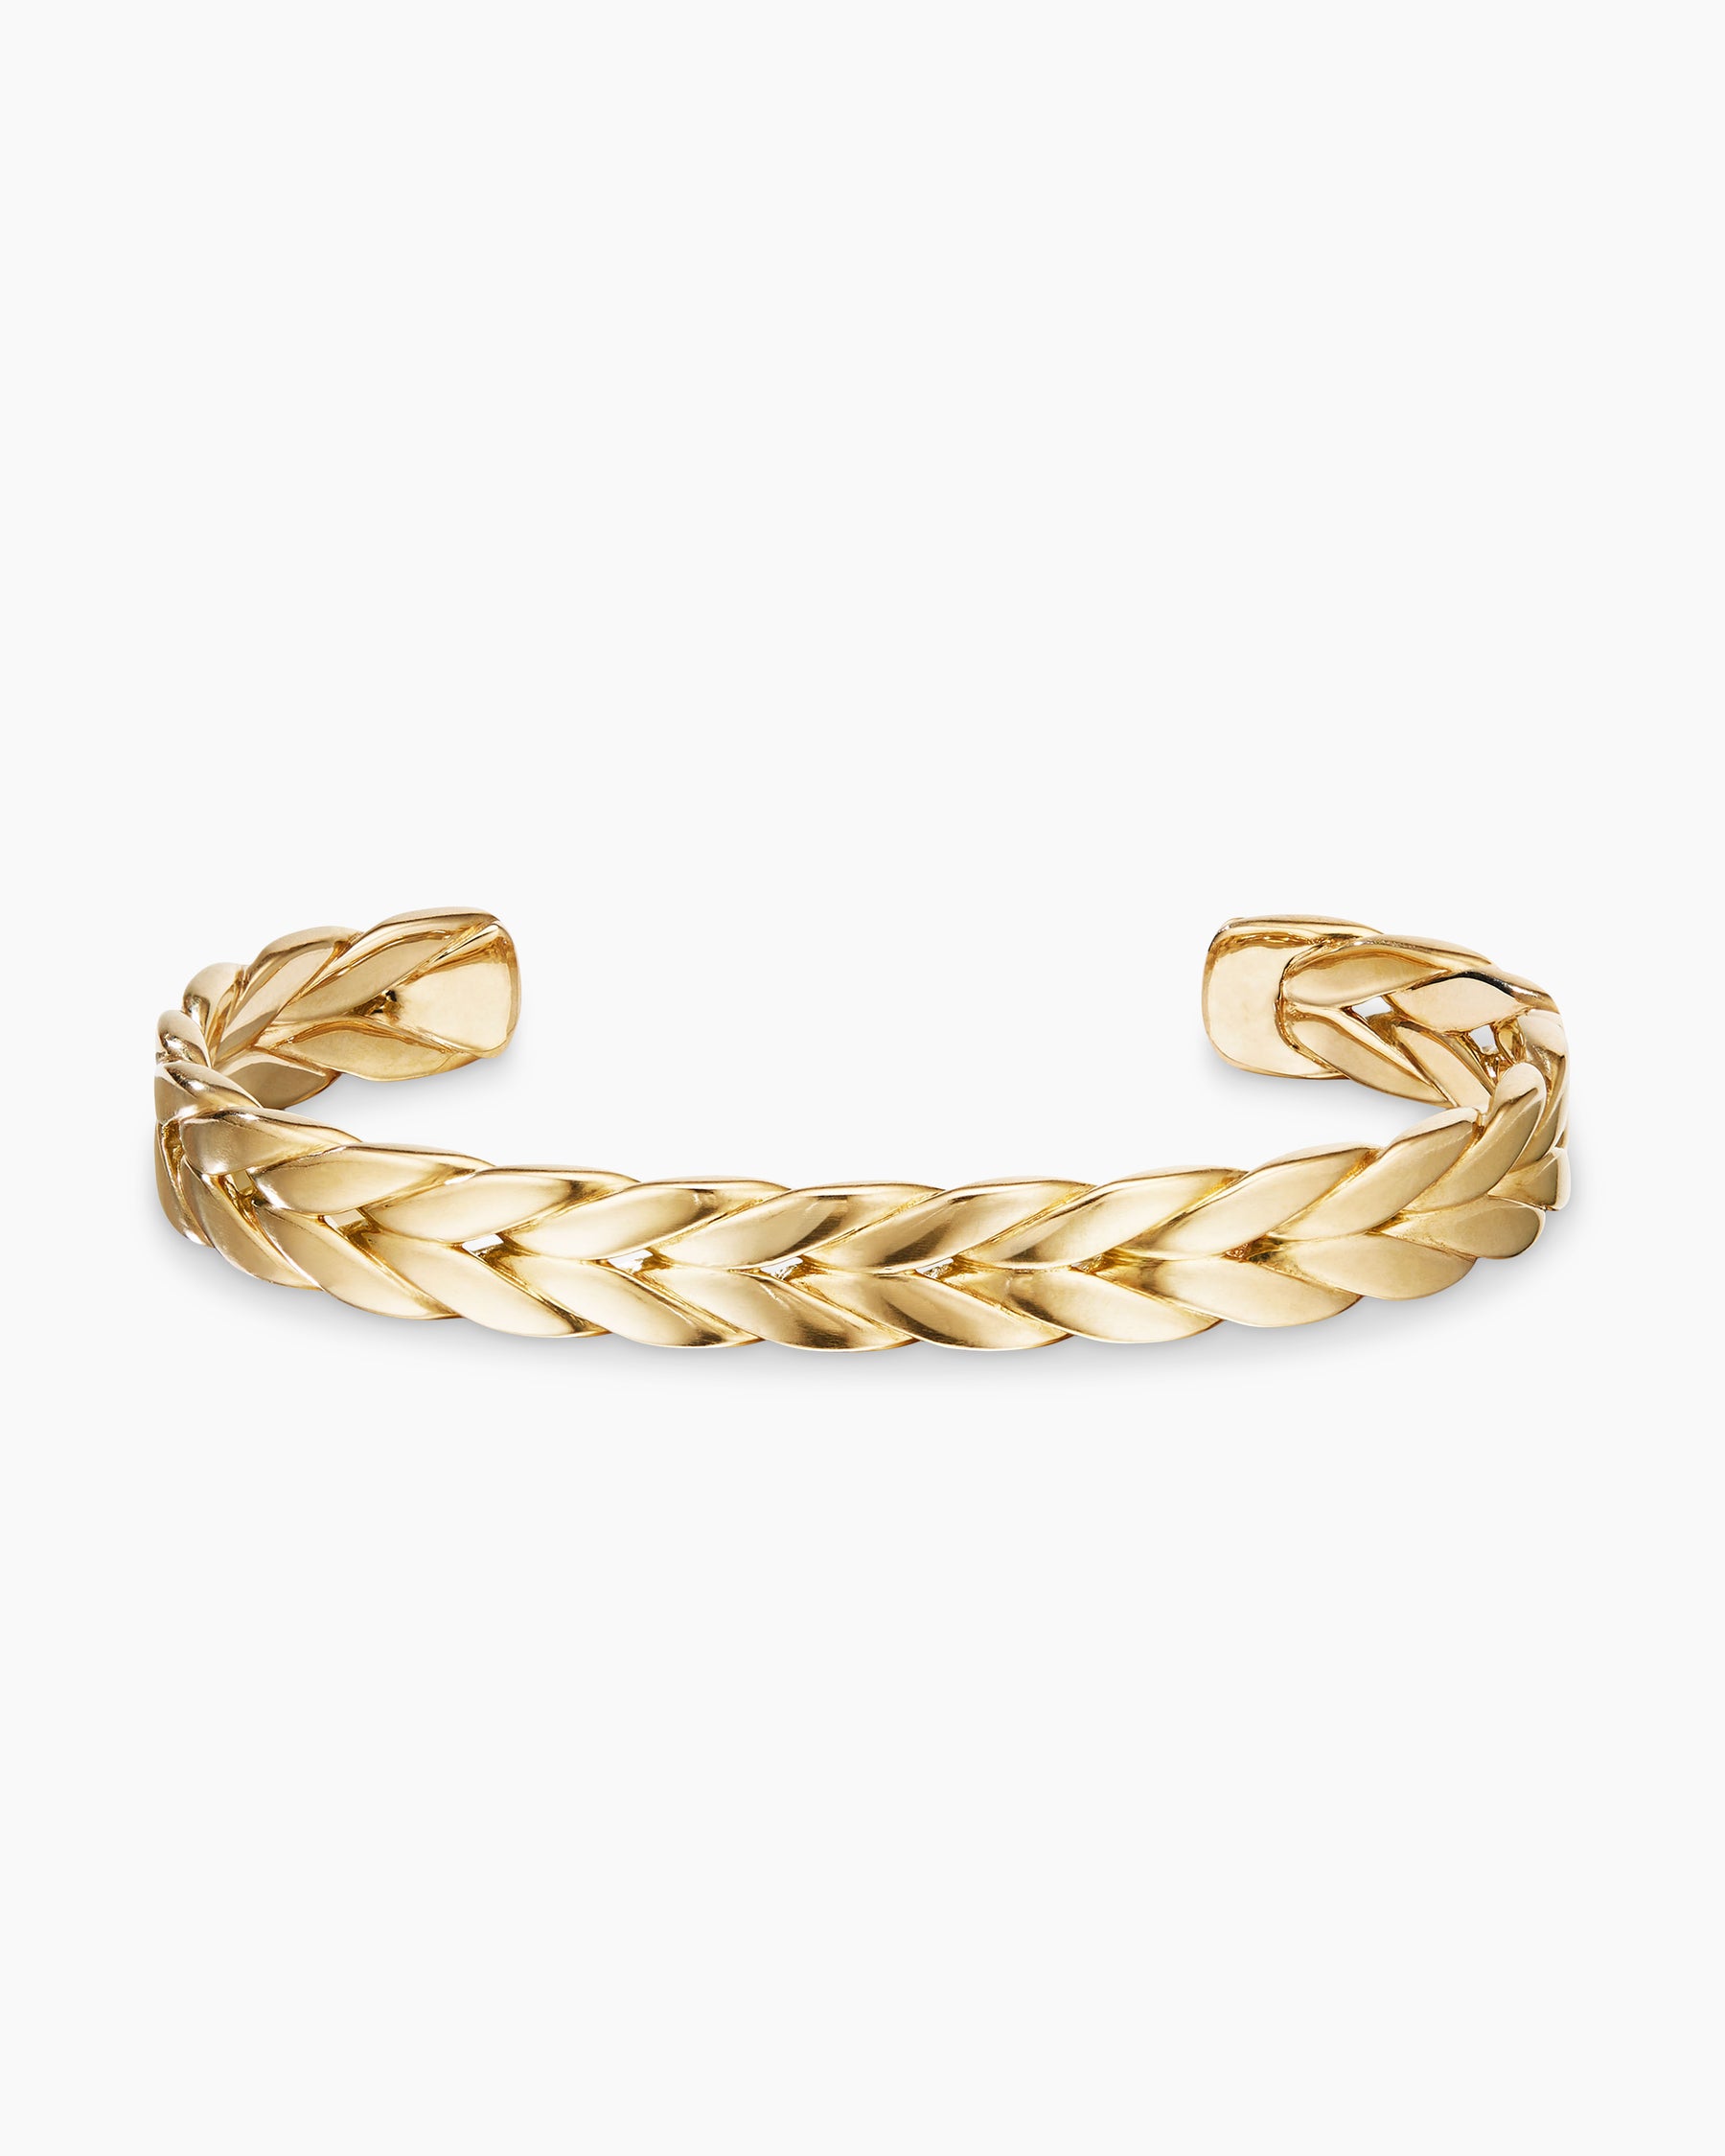 David Yurman Chevron Woven Cuff Bracelet in 18K Yellow Gold, Size Medium